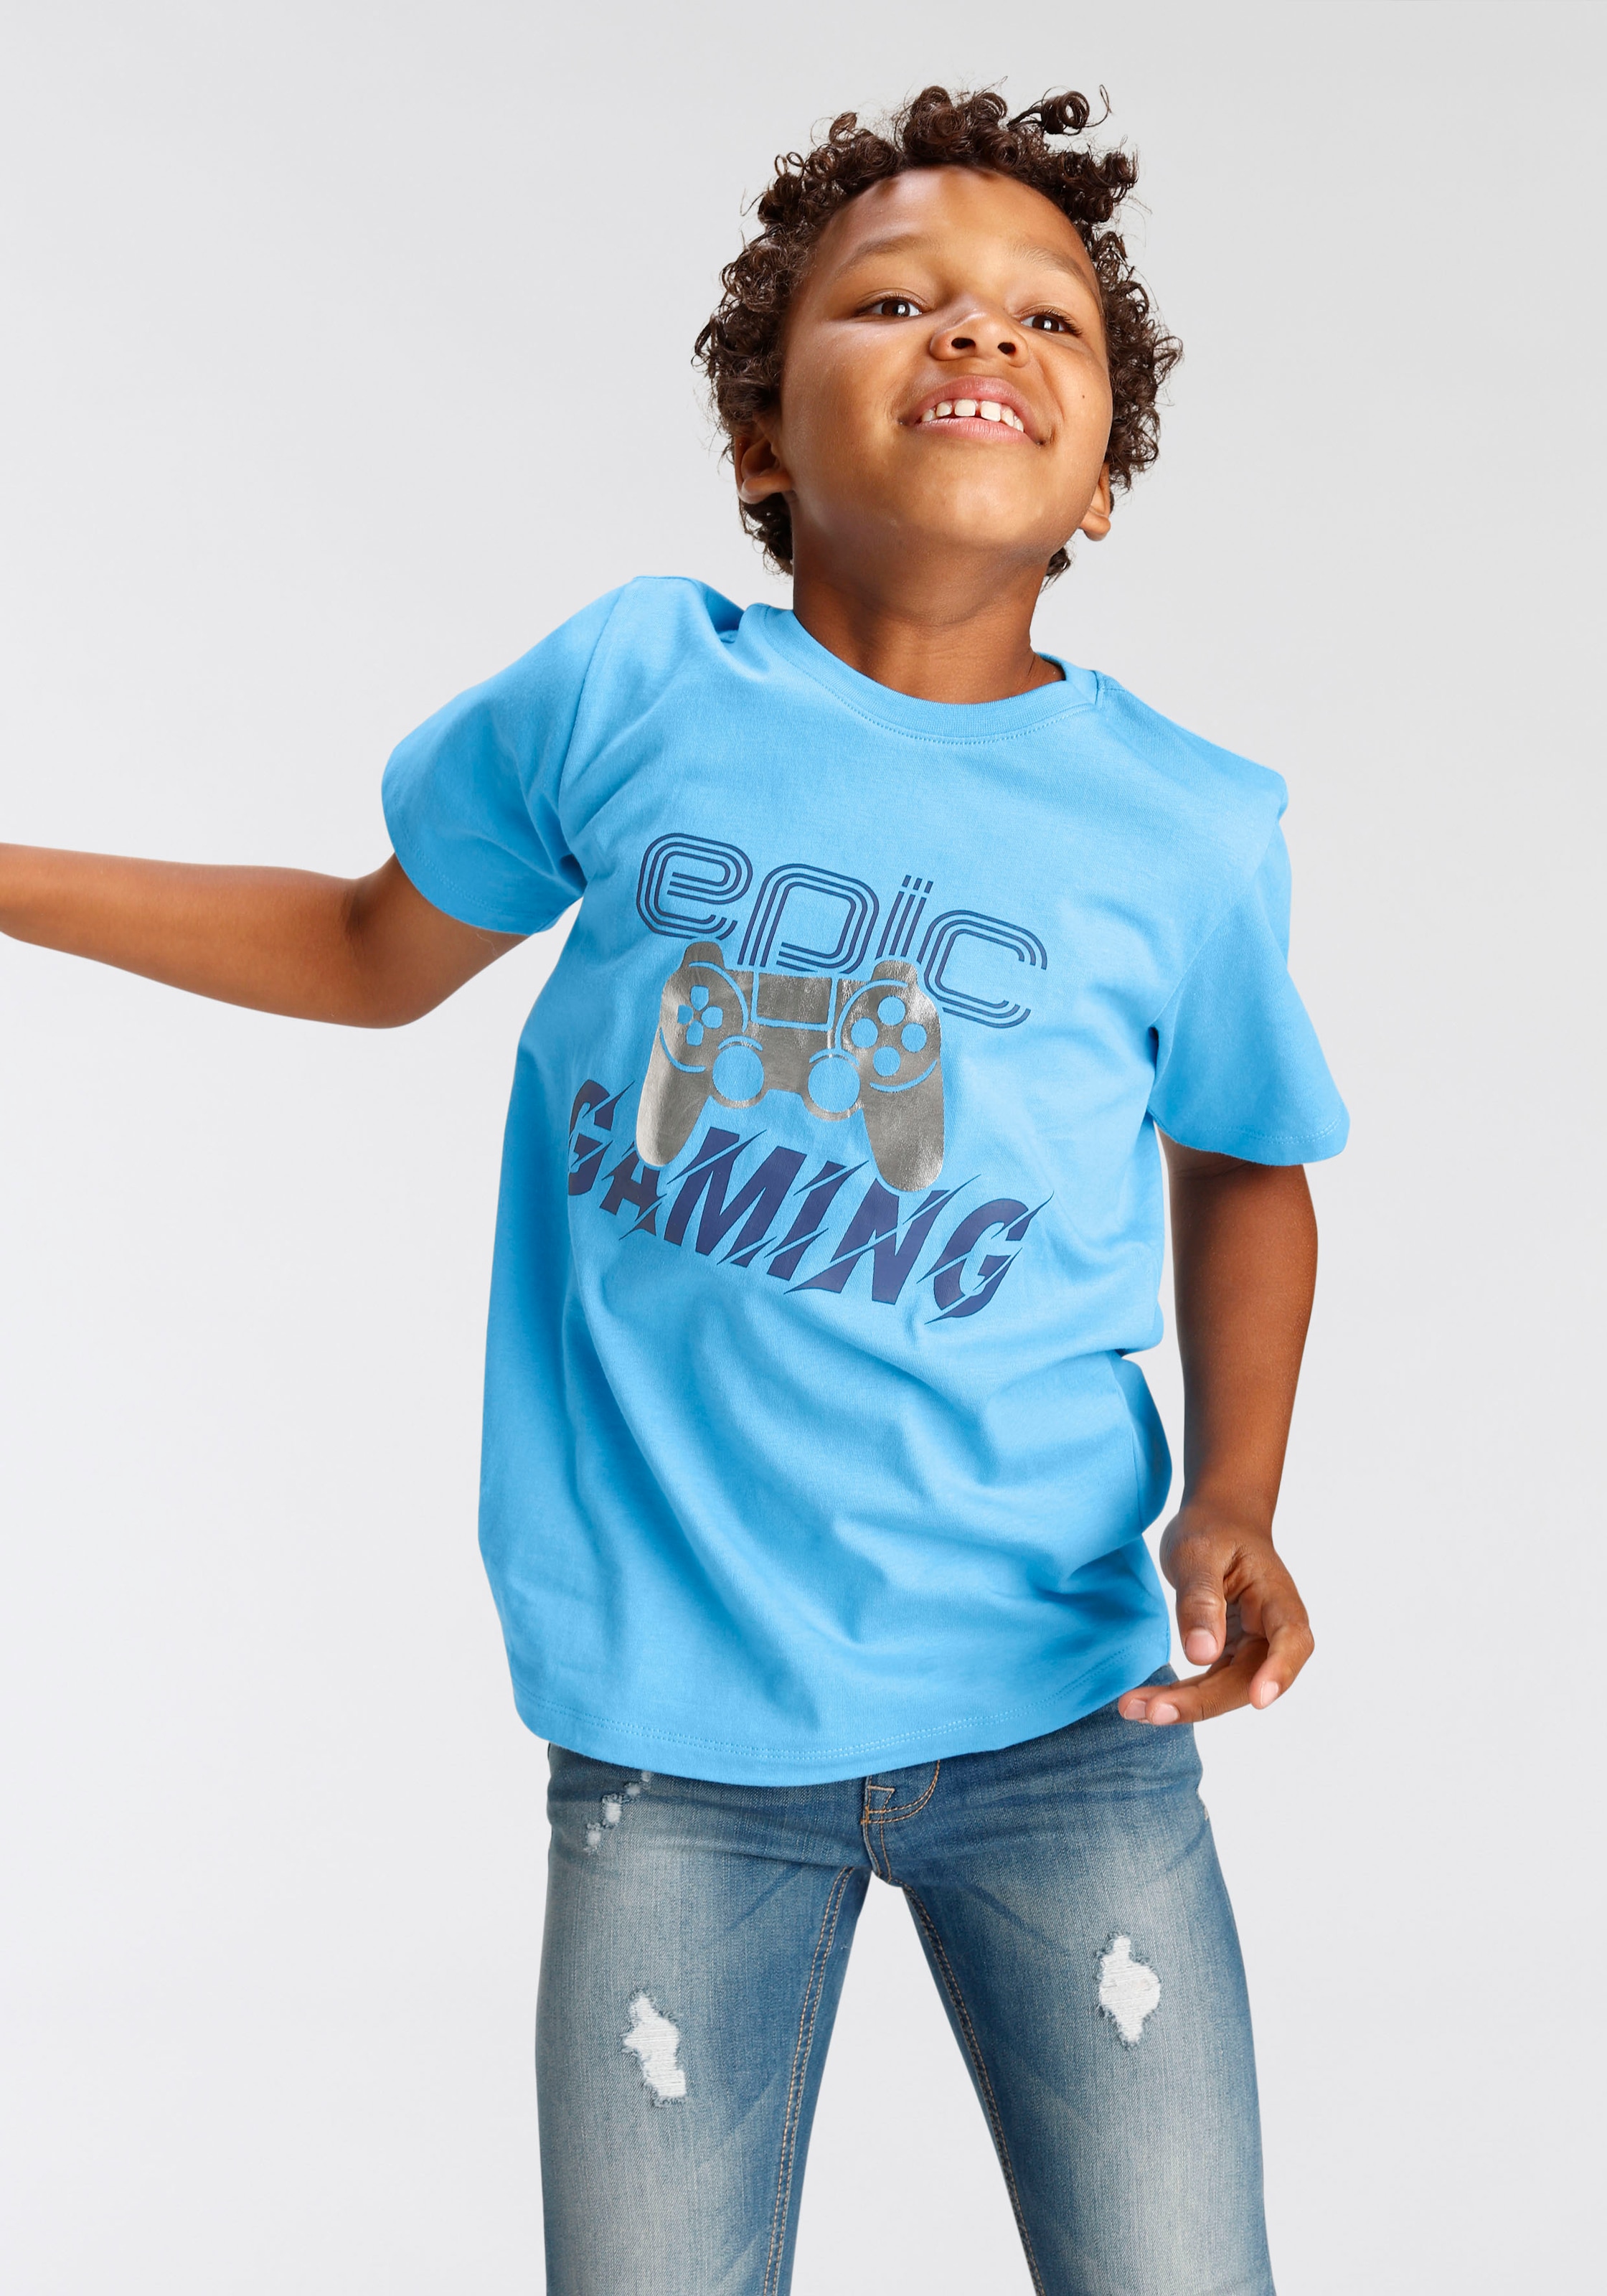 »EPIC KIDSWORLD GAMING«, online Folienprint kaufen T-Shirt